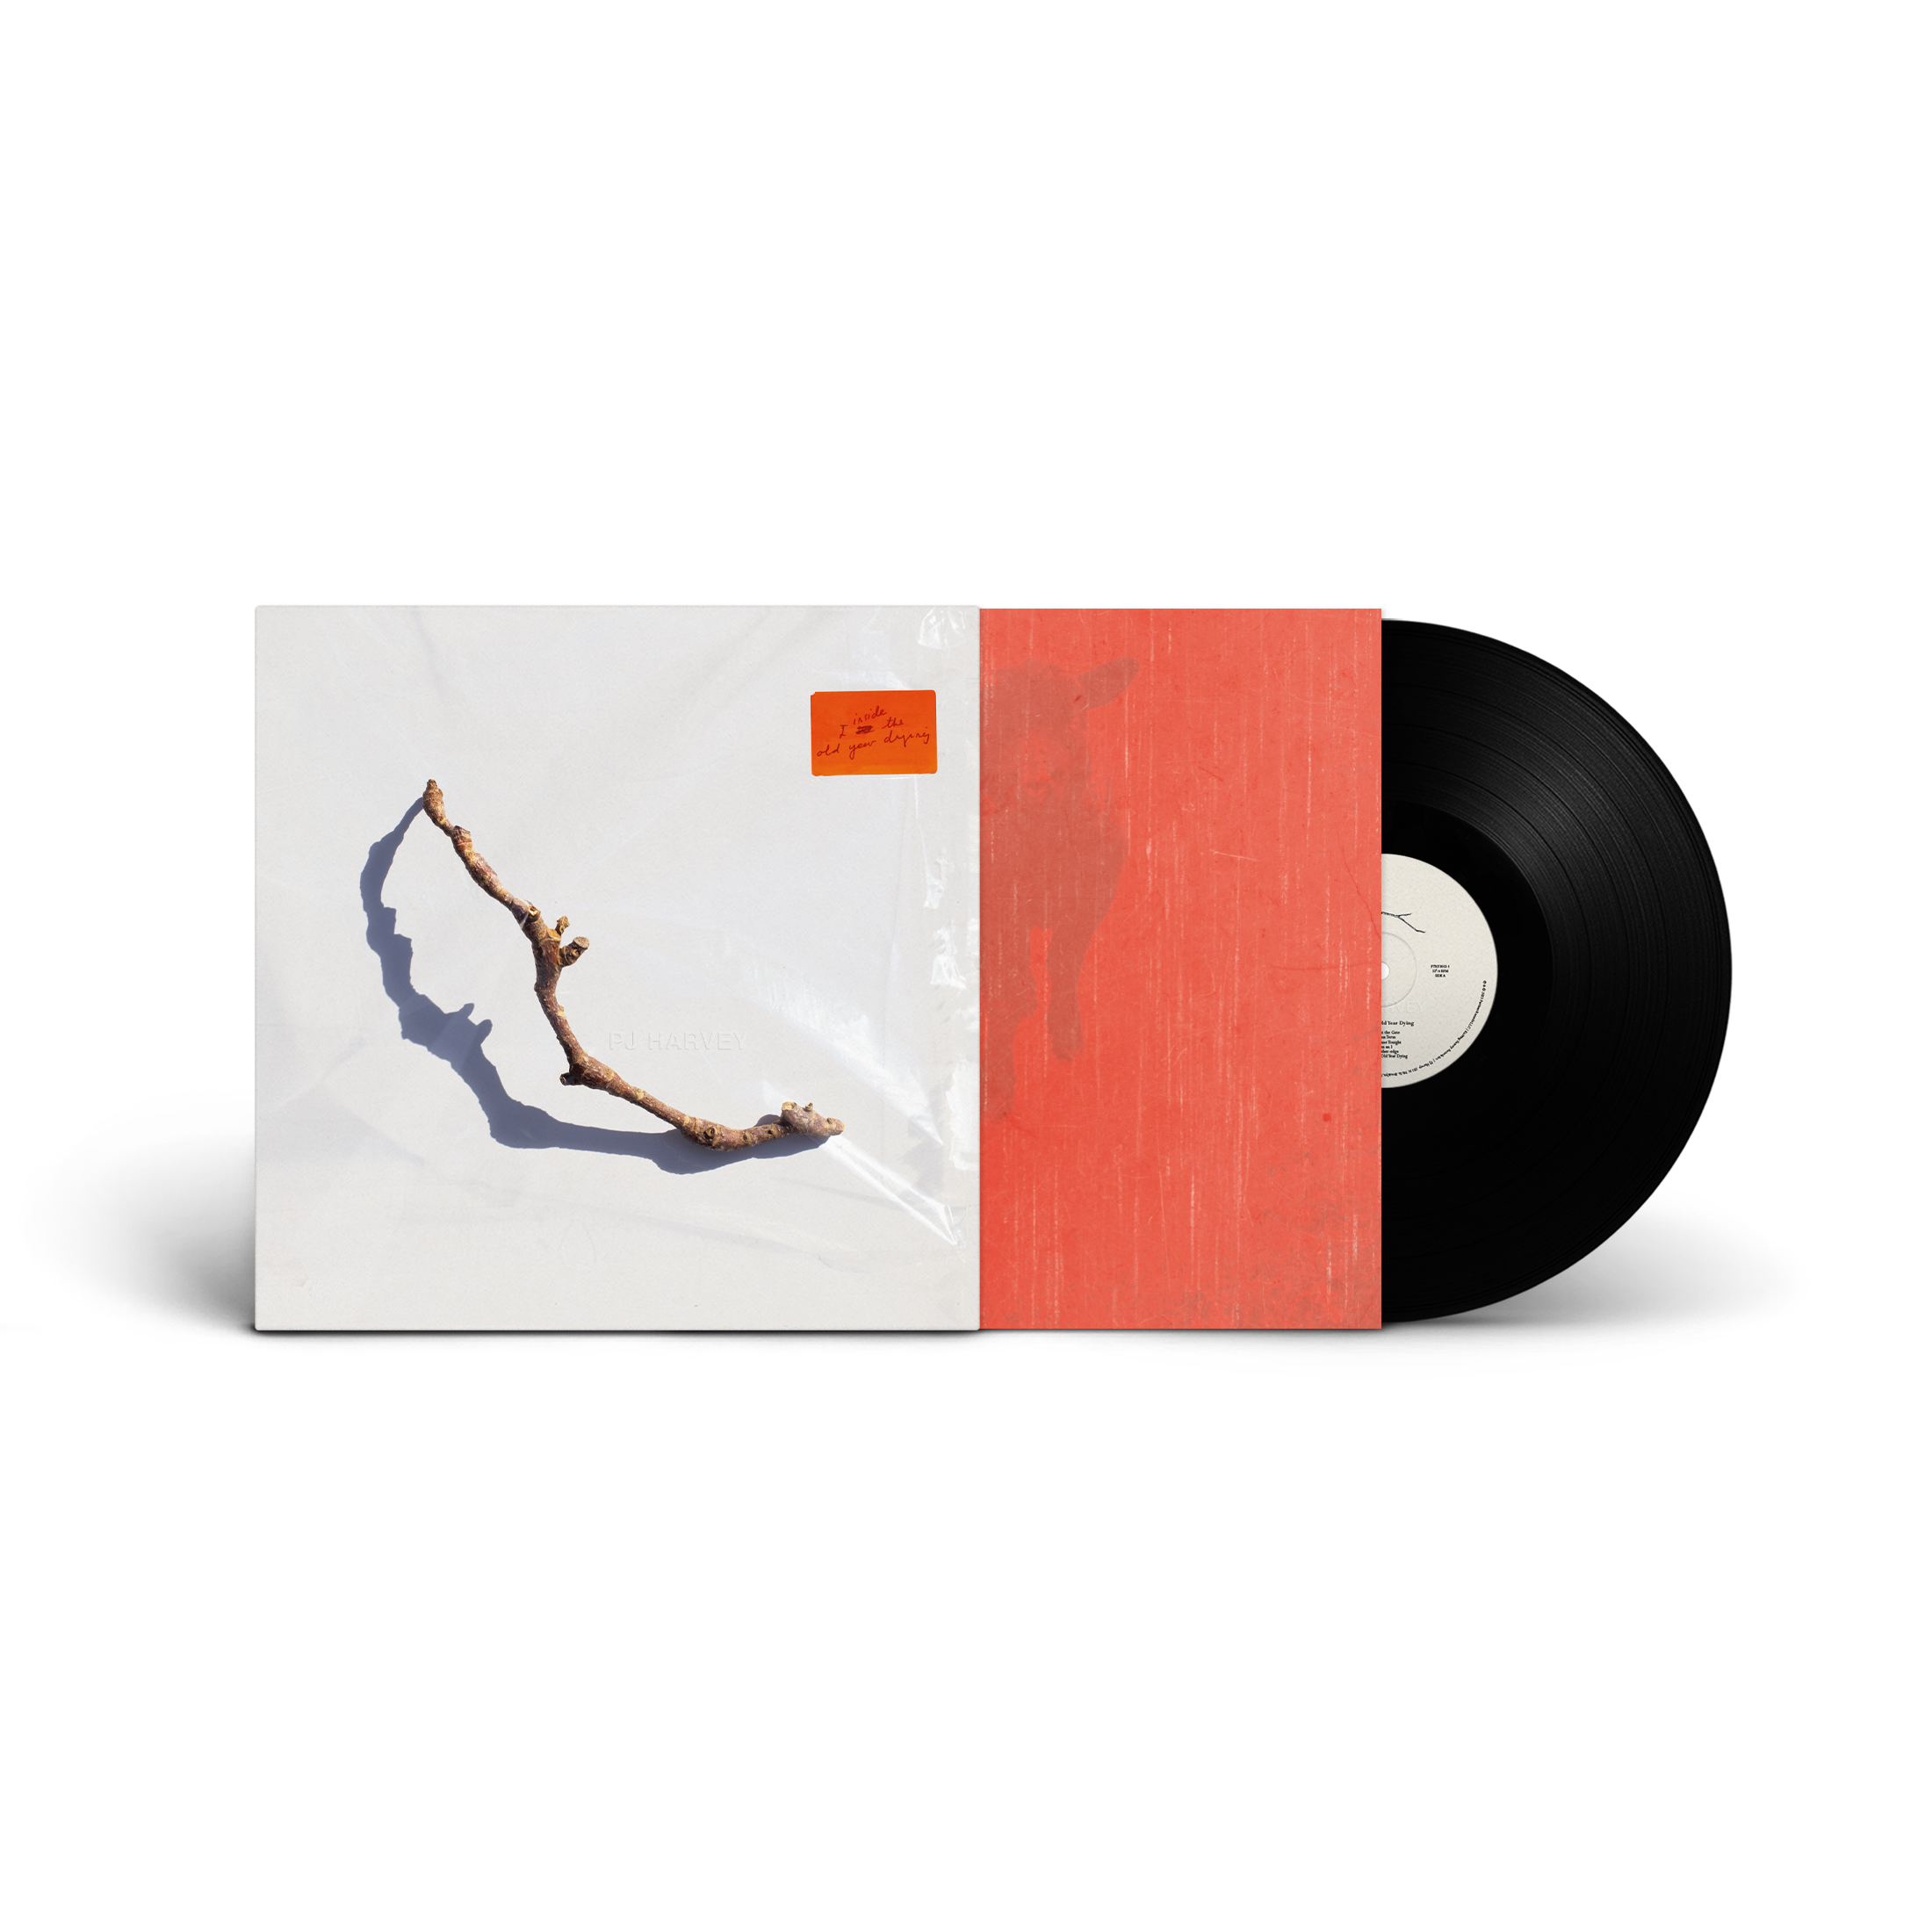 PJ Harvey - I Inside the Old Year Dying: Vinyl LP